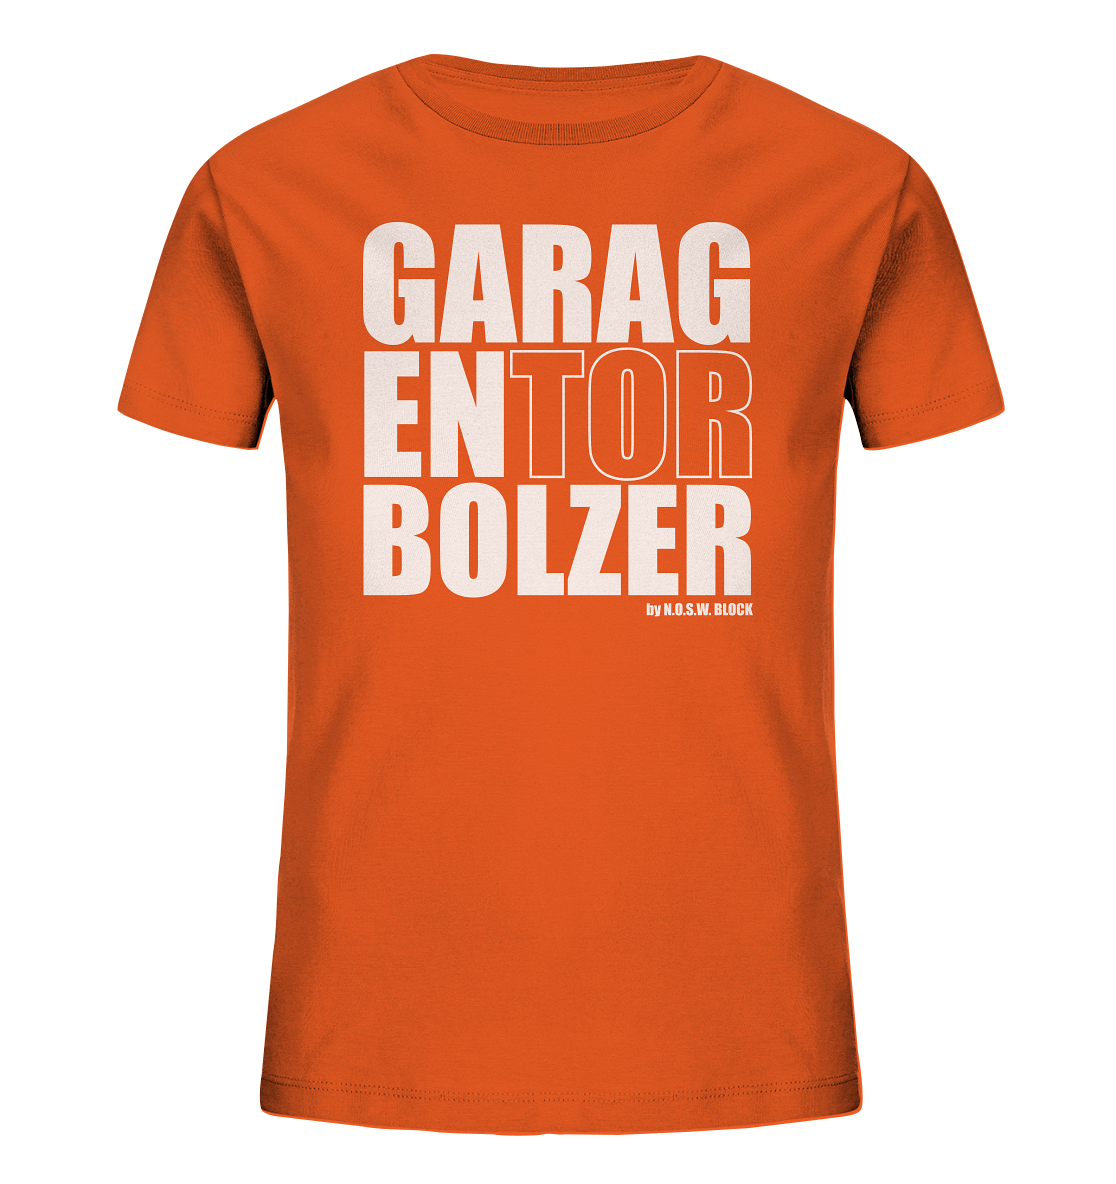 Teamsport Shirt "GARAGENTOR BOLZER" Kids Organic UNISEX T-Shirt orange